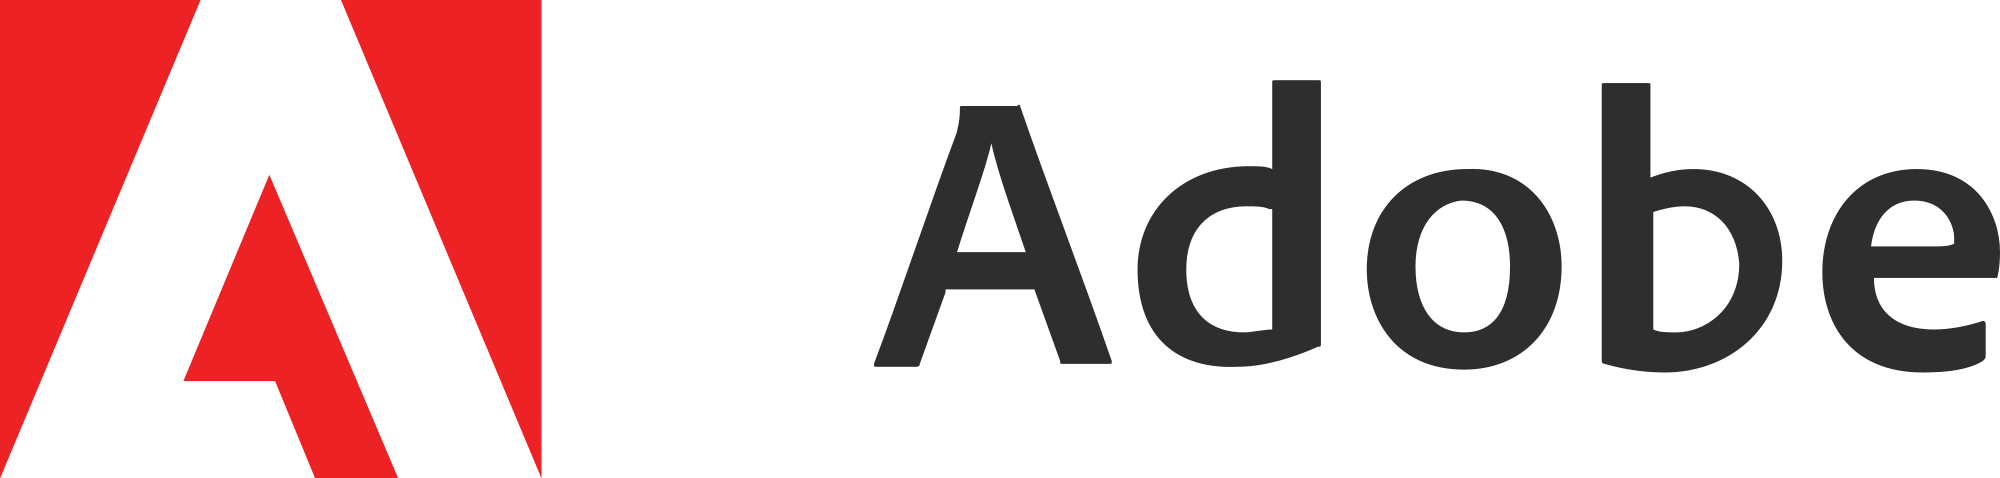 Adobe Logo - Adobe Systems logo and wordmark (2017).svg